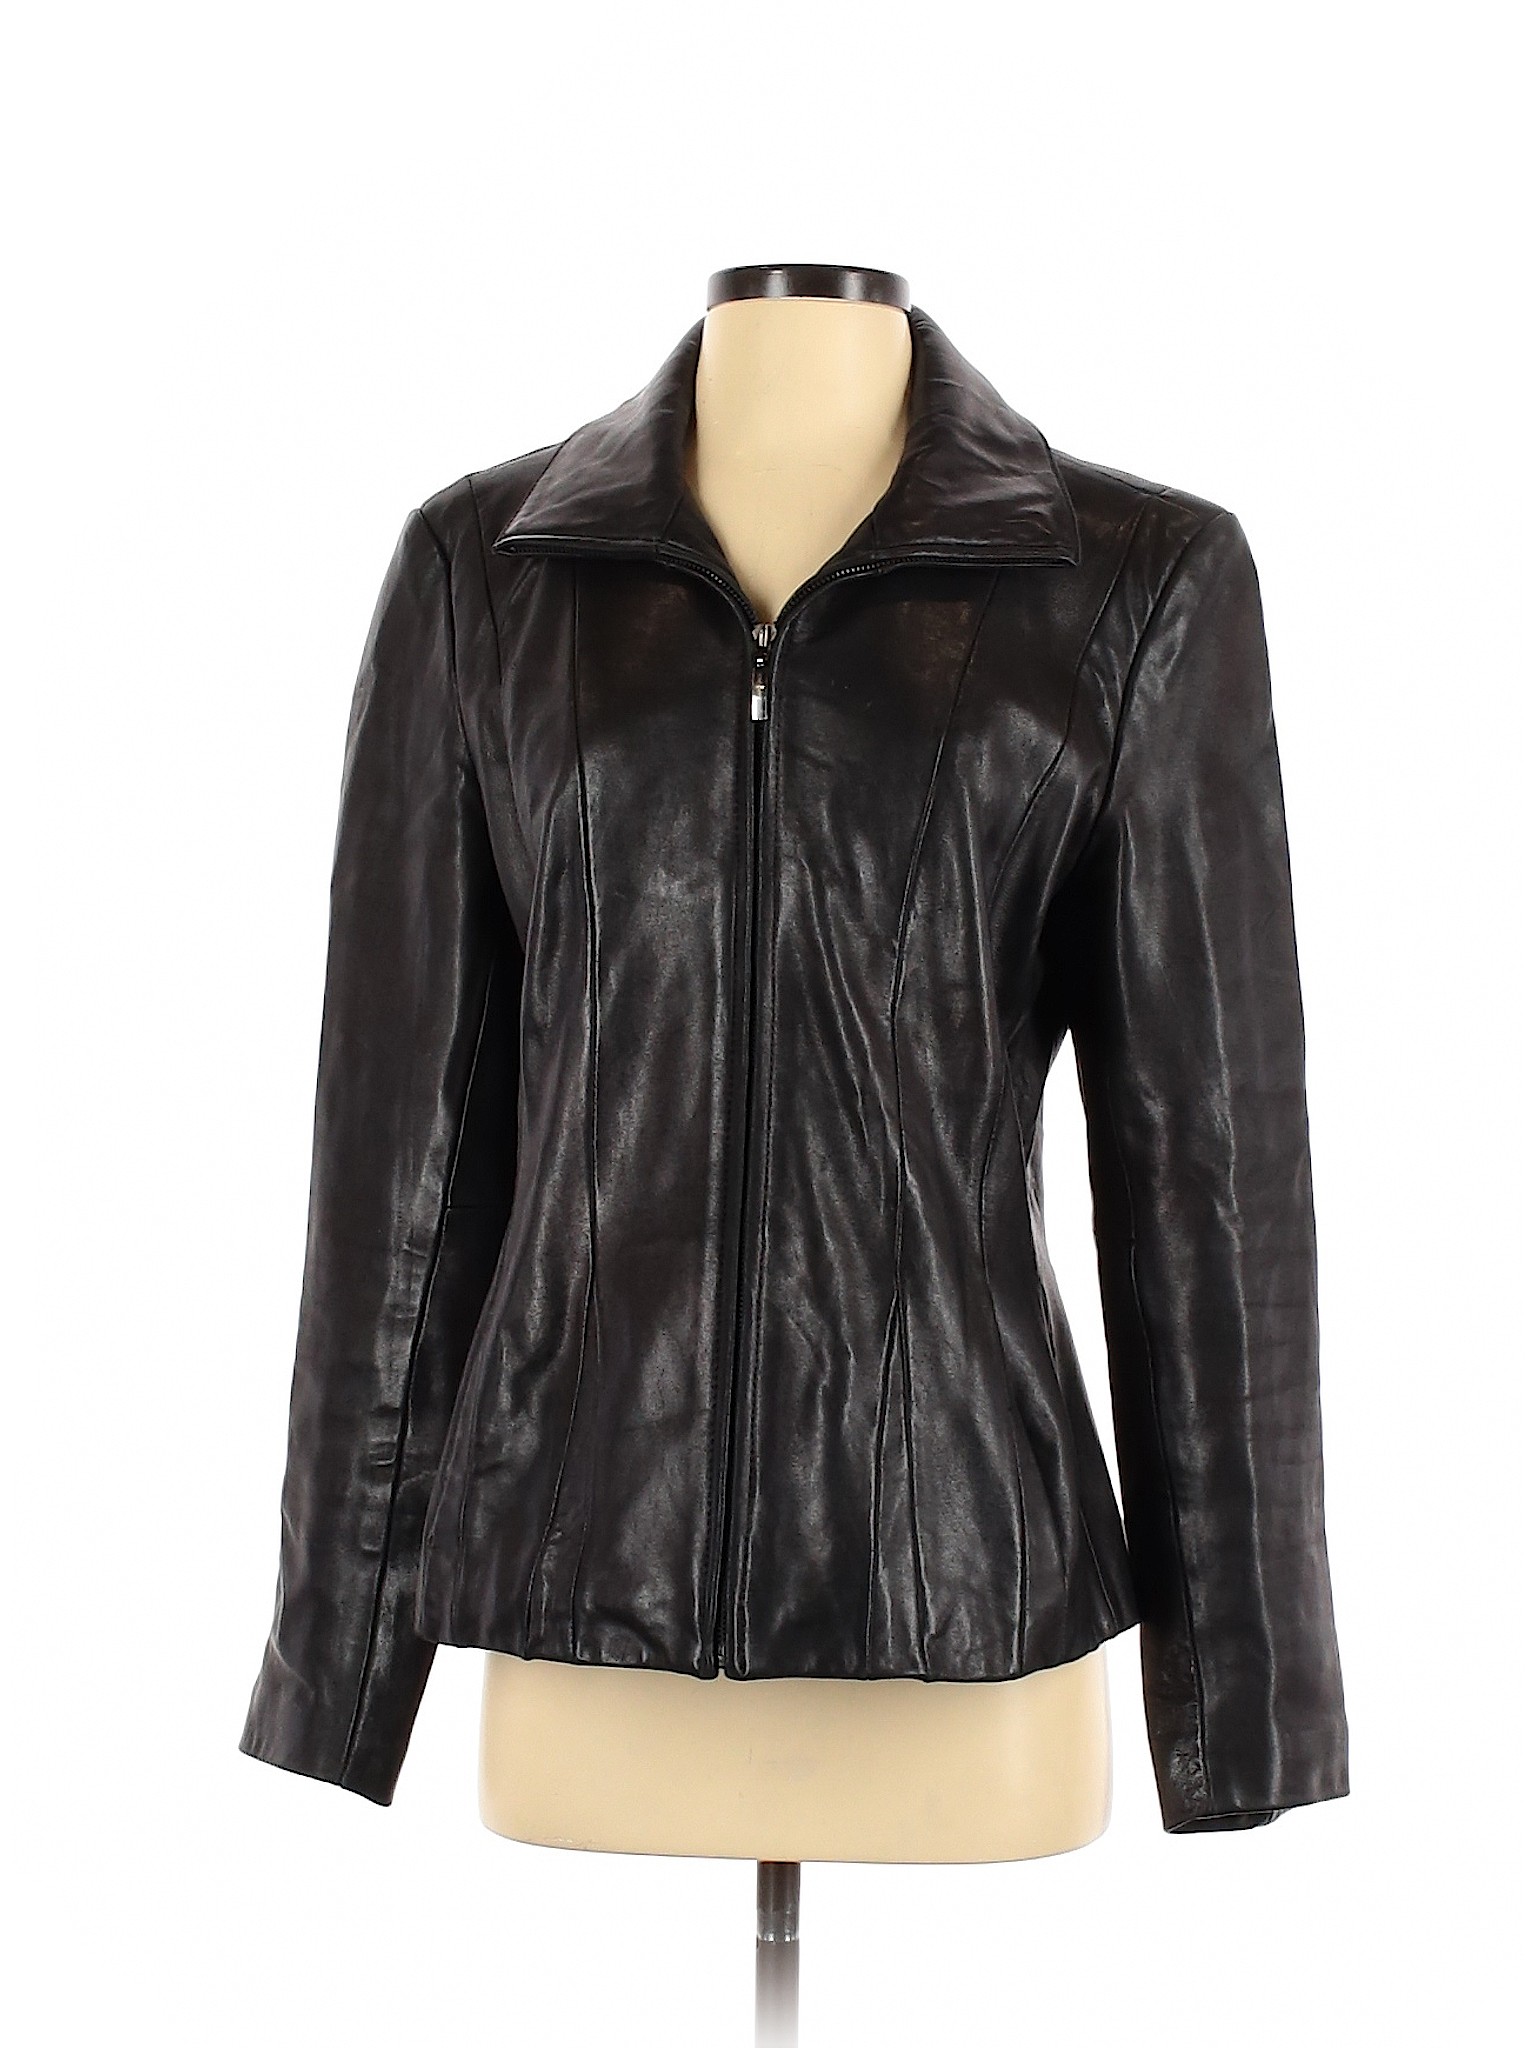 Jones New York 100% Leather Black Leather Jacket Size M - 82% off | thredUP